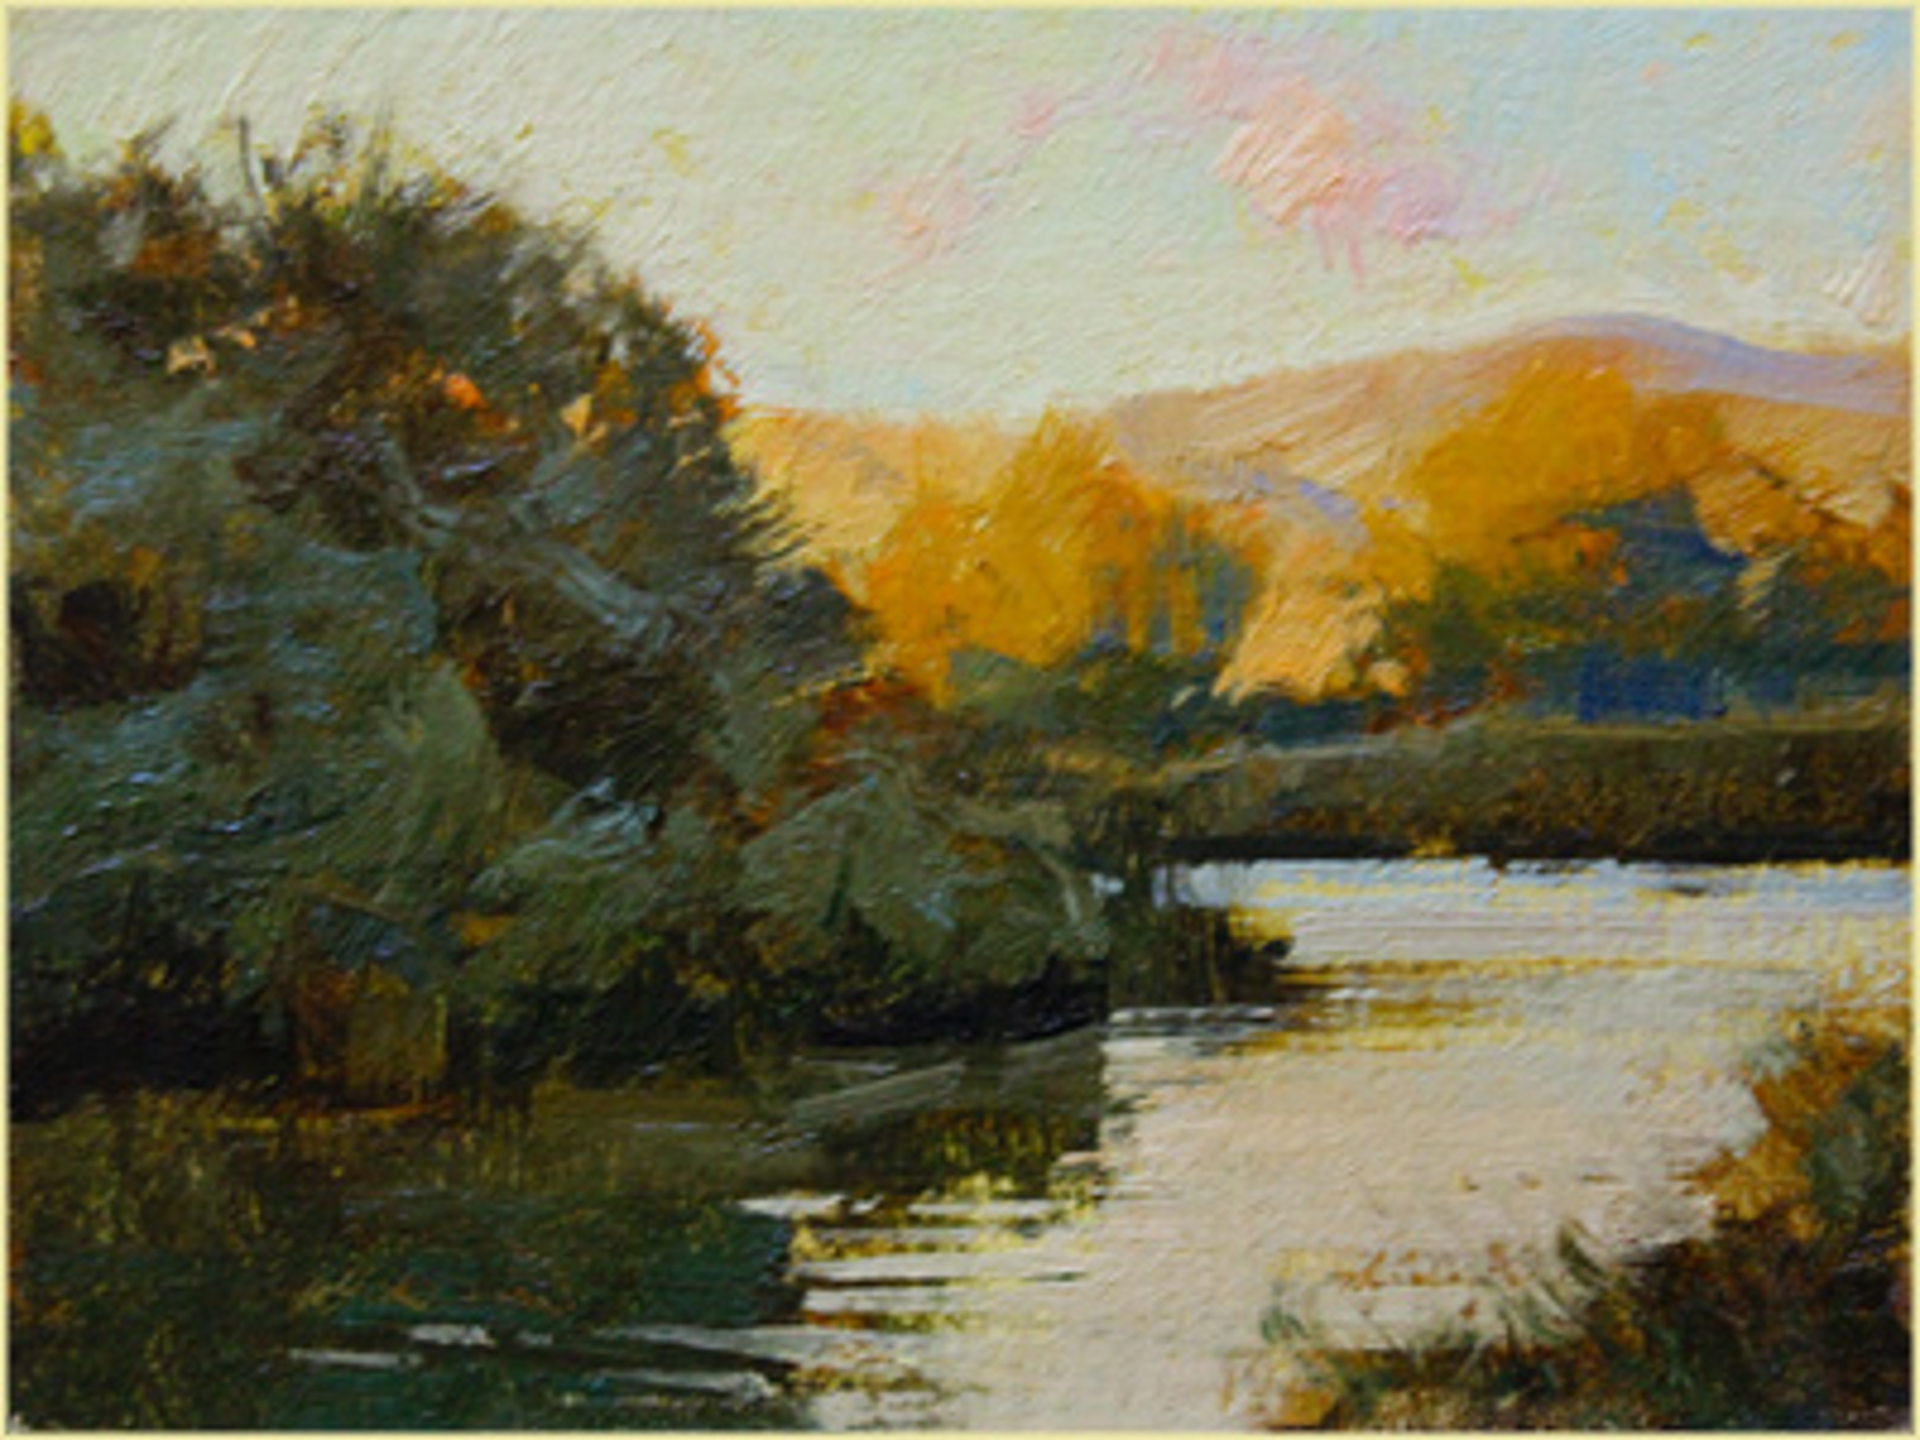 Lagunitas Creek by Michael J Lynch